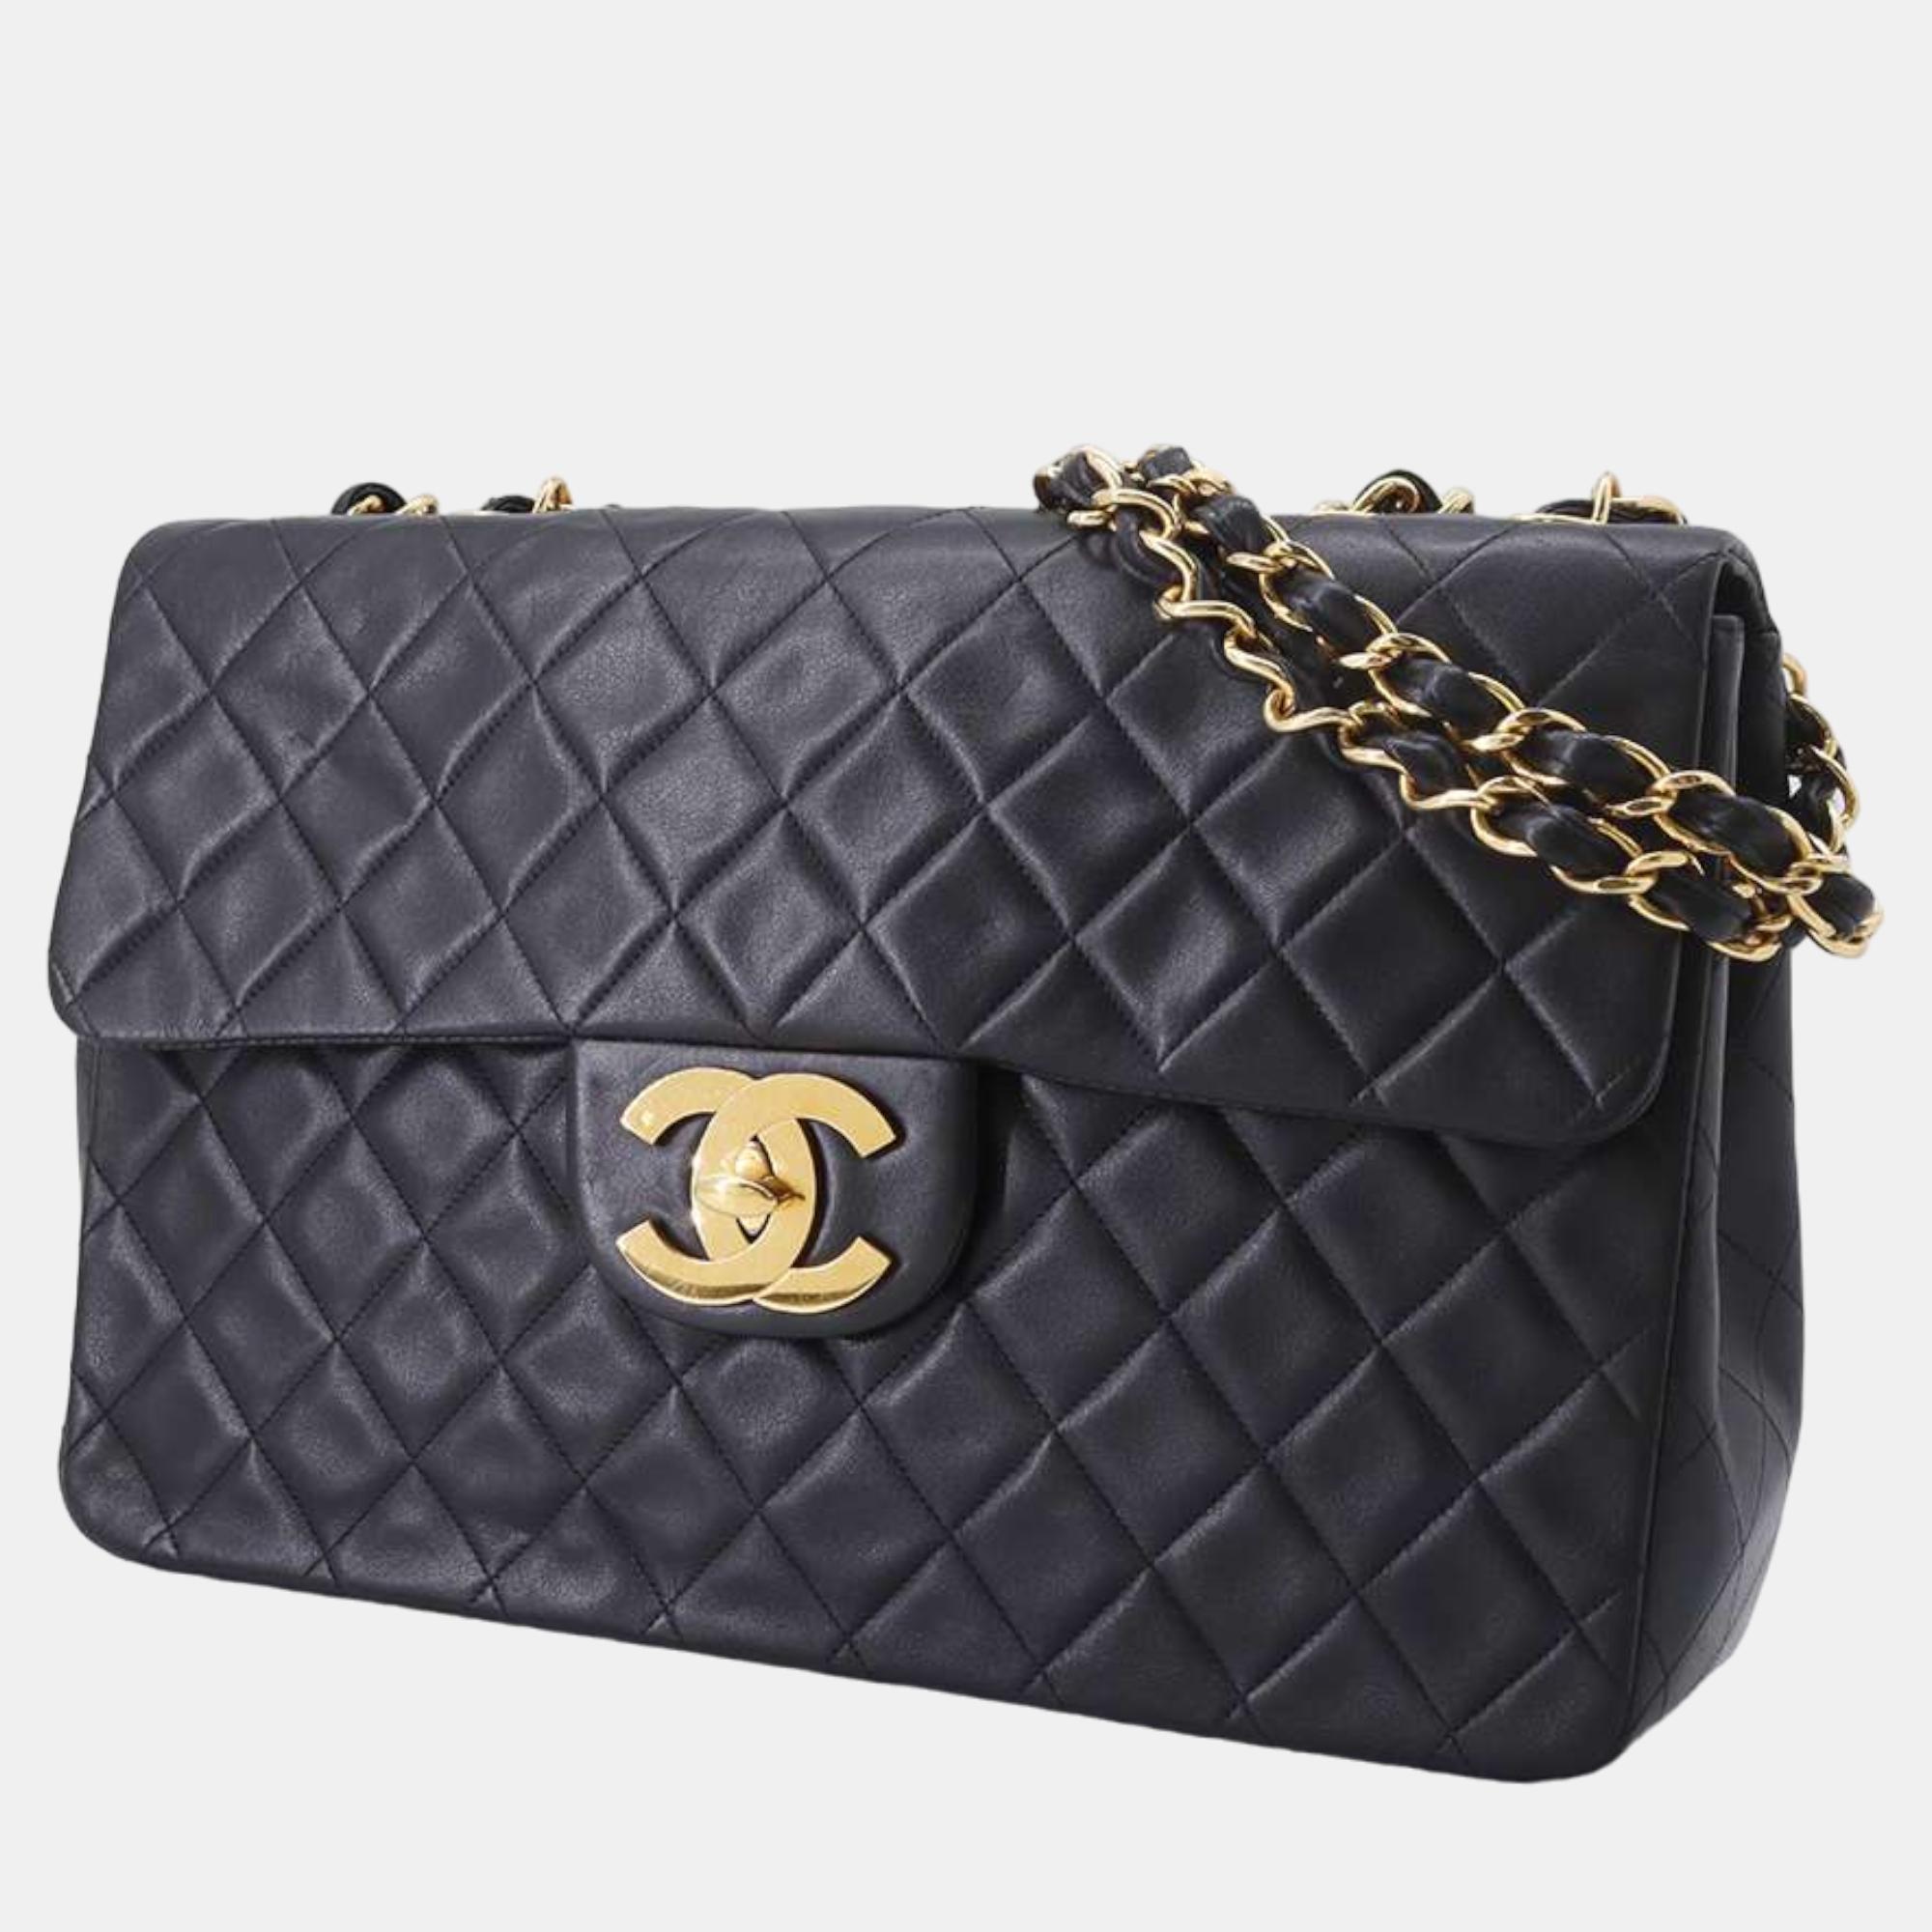 Chanel black lambskin leather classic jumbo flap bag